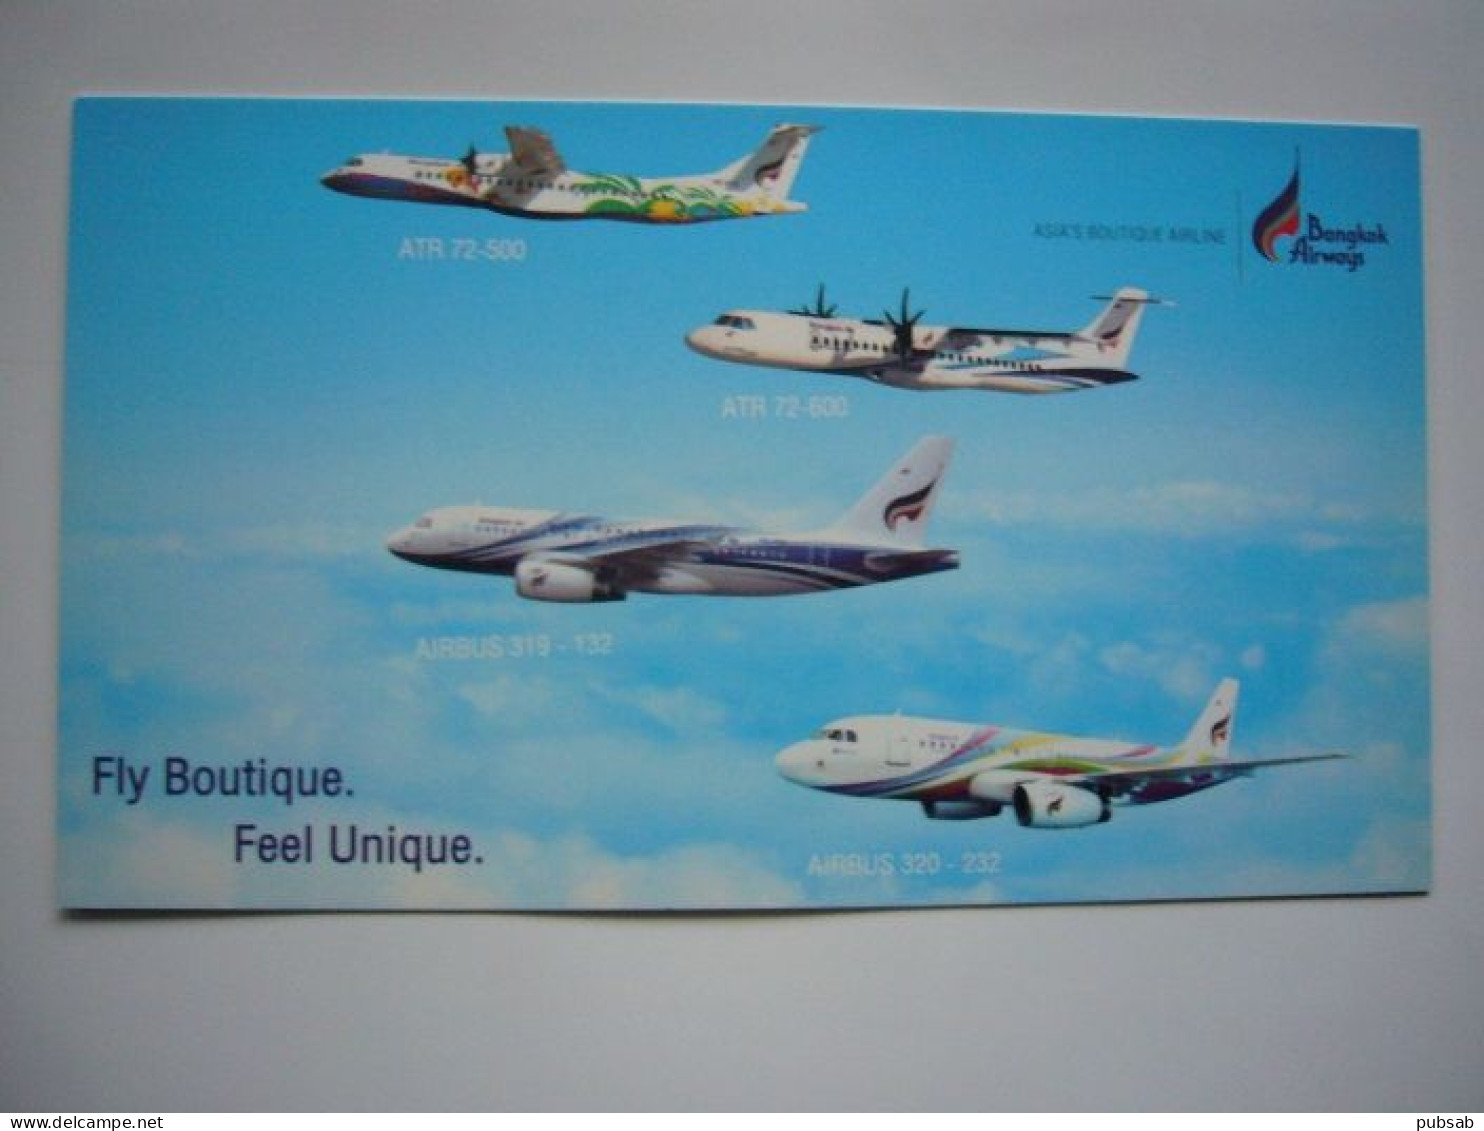 Avion / Airplane / BANGKOK AIRWAYS / ATR 72-500/600 - Airbus A319/320 / Airline Issue / Size: 10X18cm - 1946-....: Modern Era